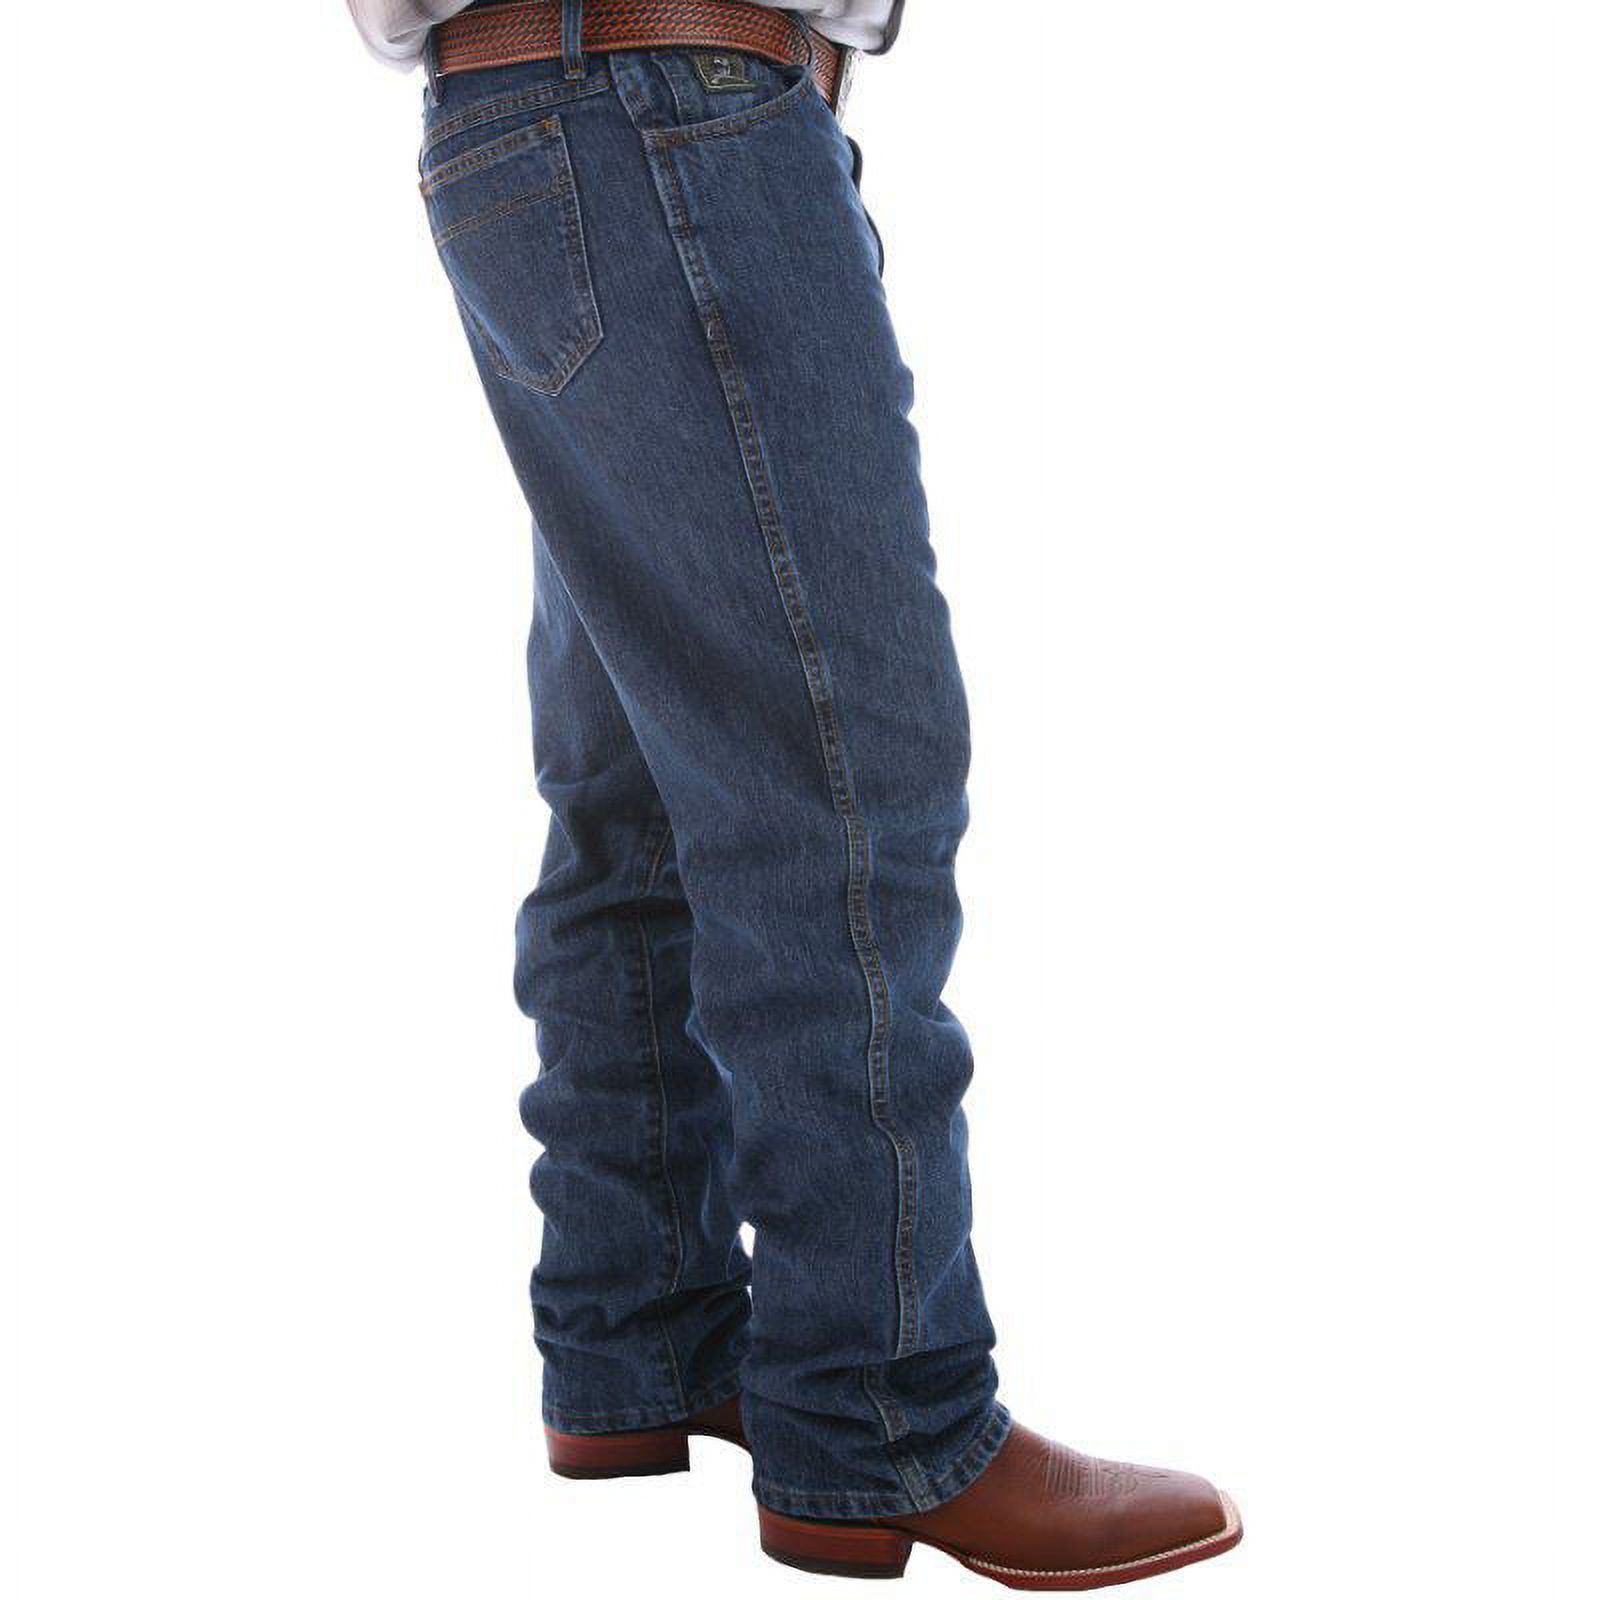 Cinch Western Jeans Mens Green Label 35 x 34 Dark Wash MB90530002 - image 4 of 4